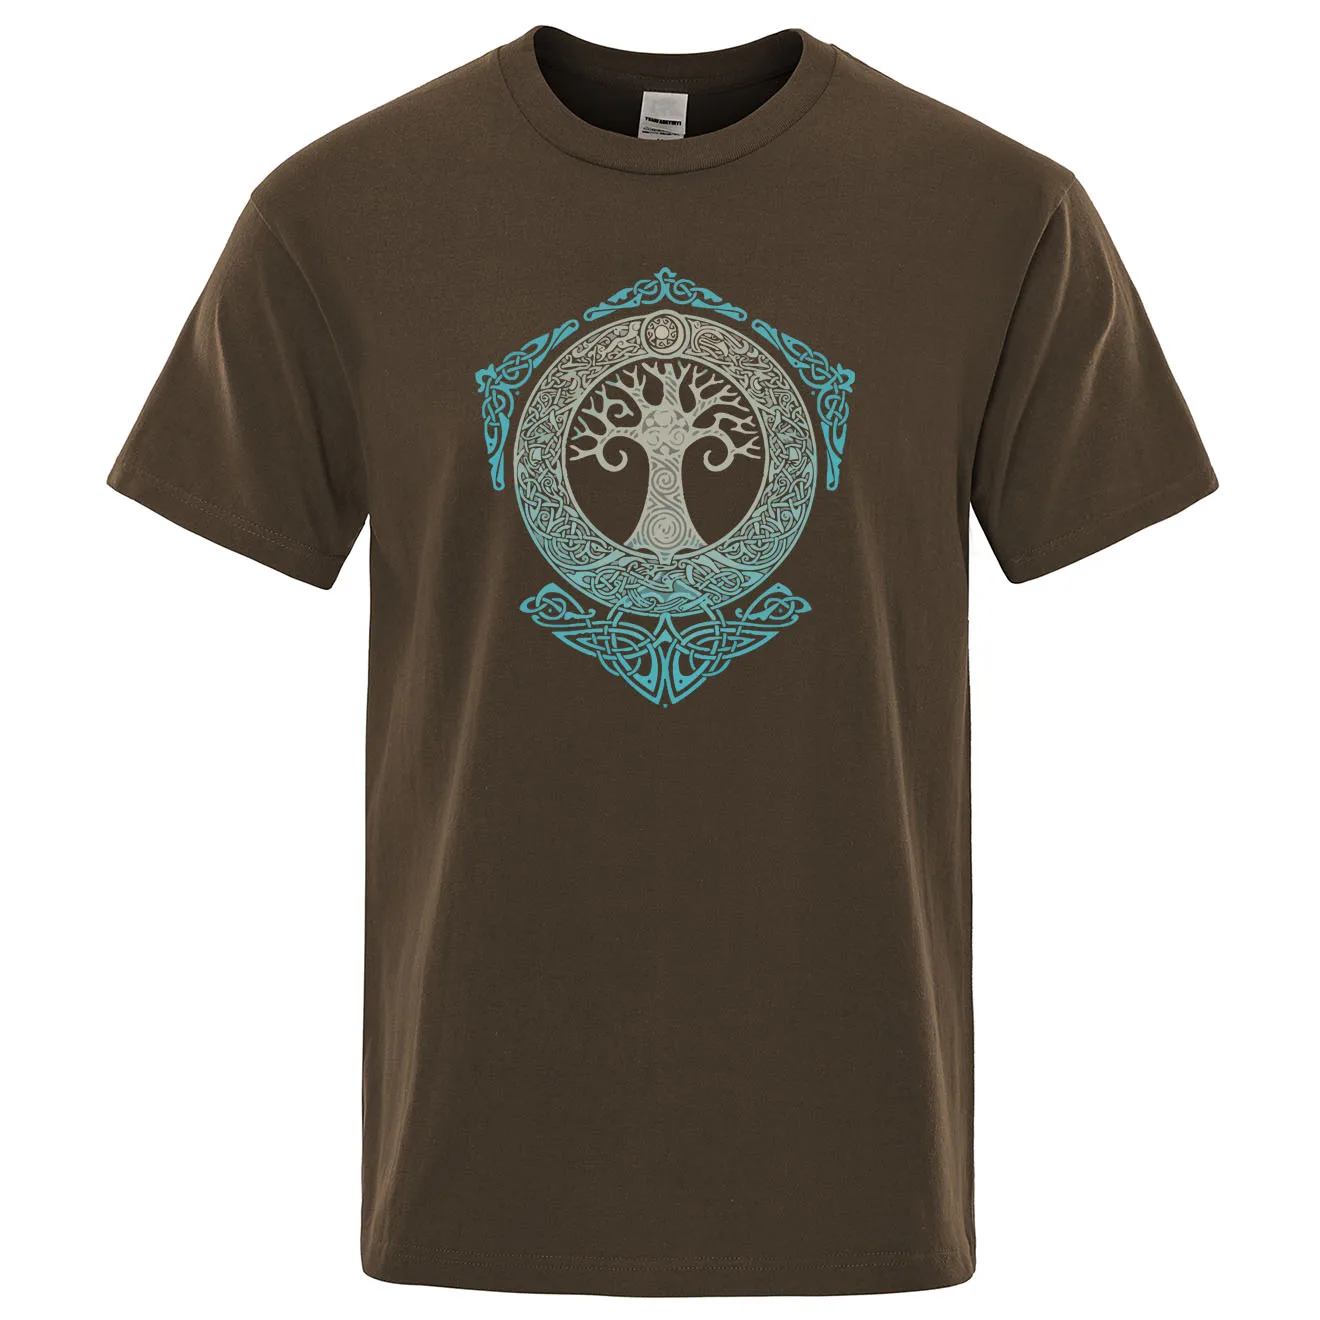 Yggdrasil T shirt Svetu Drevo Moških Vrhovi Modni Vzorec Tee 2020 Poletje Bombaža T-Shirt Odin Aesir Nordijski Mitologiji Tshirt Moški